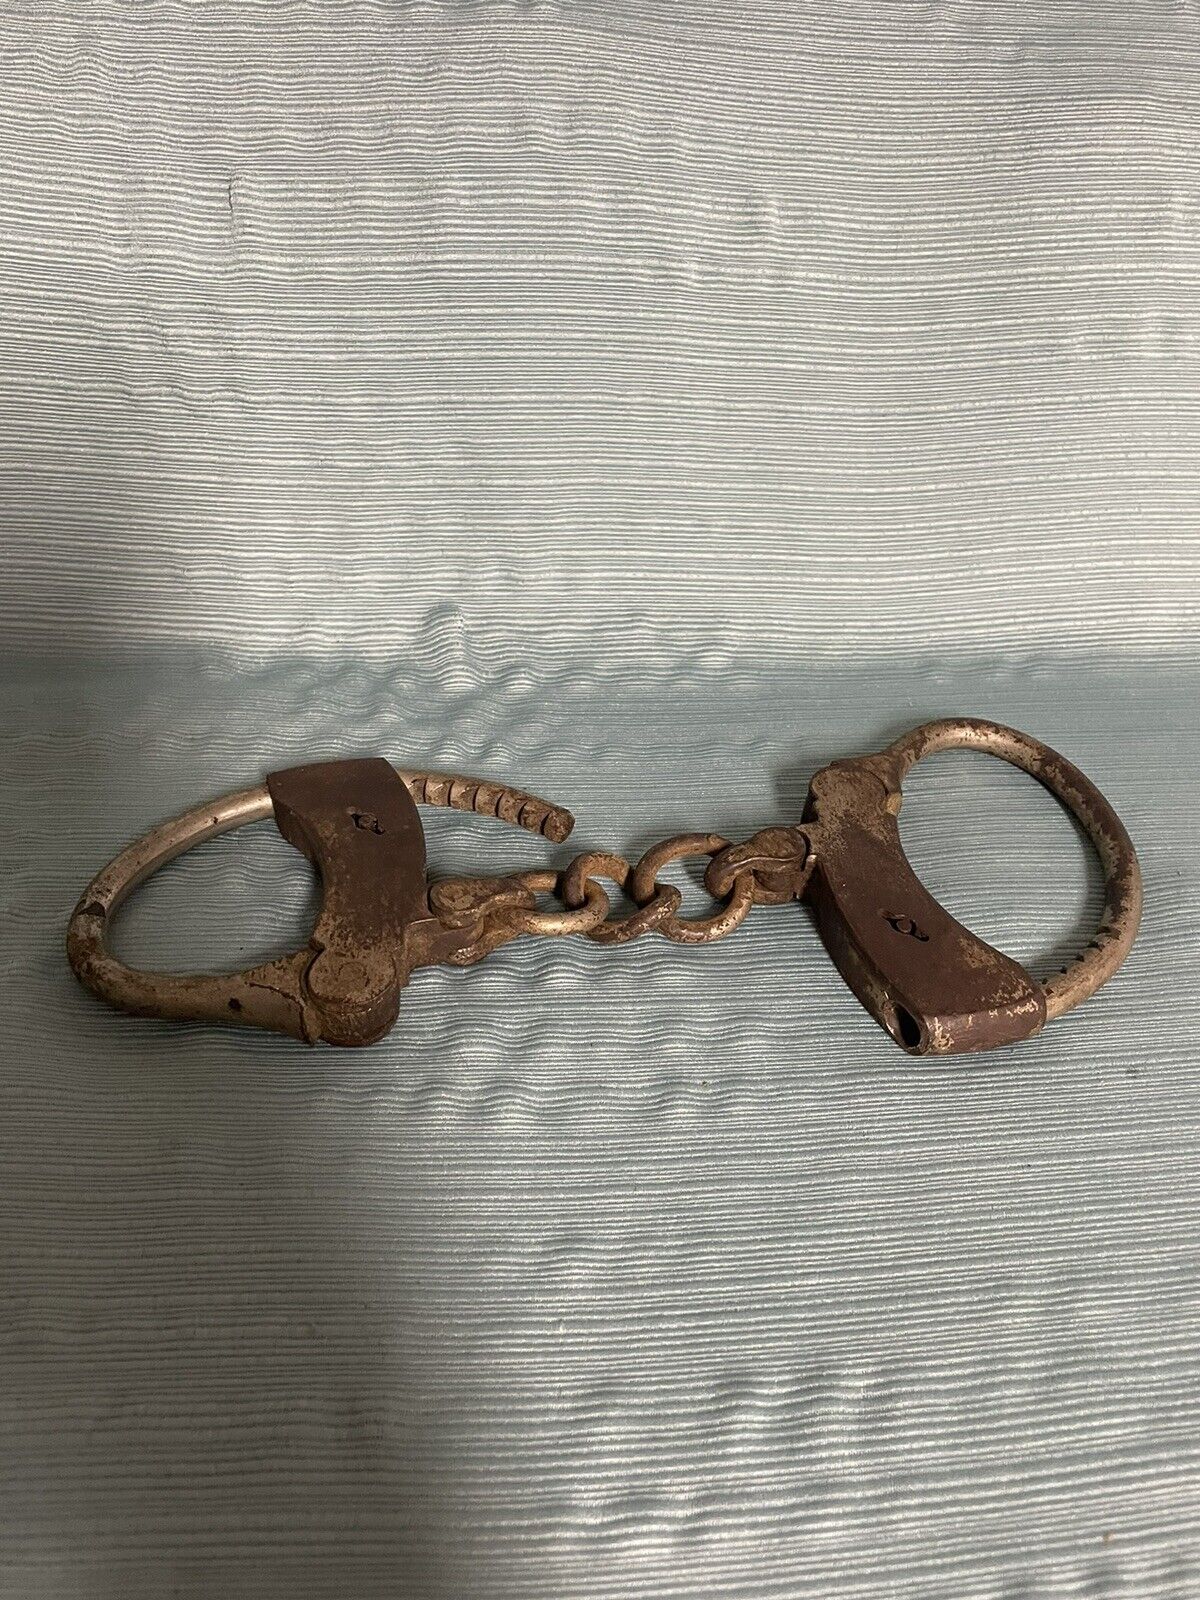 Antique Patent Mattatuck Waterbury Conn. Rusty Handcuffs Restraints (NO KEY)